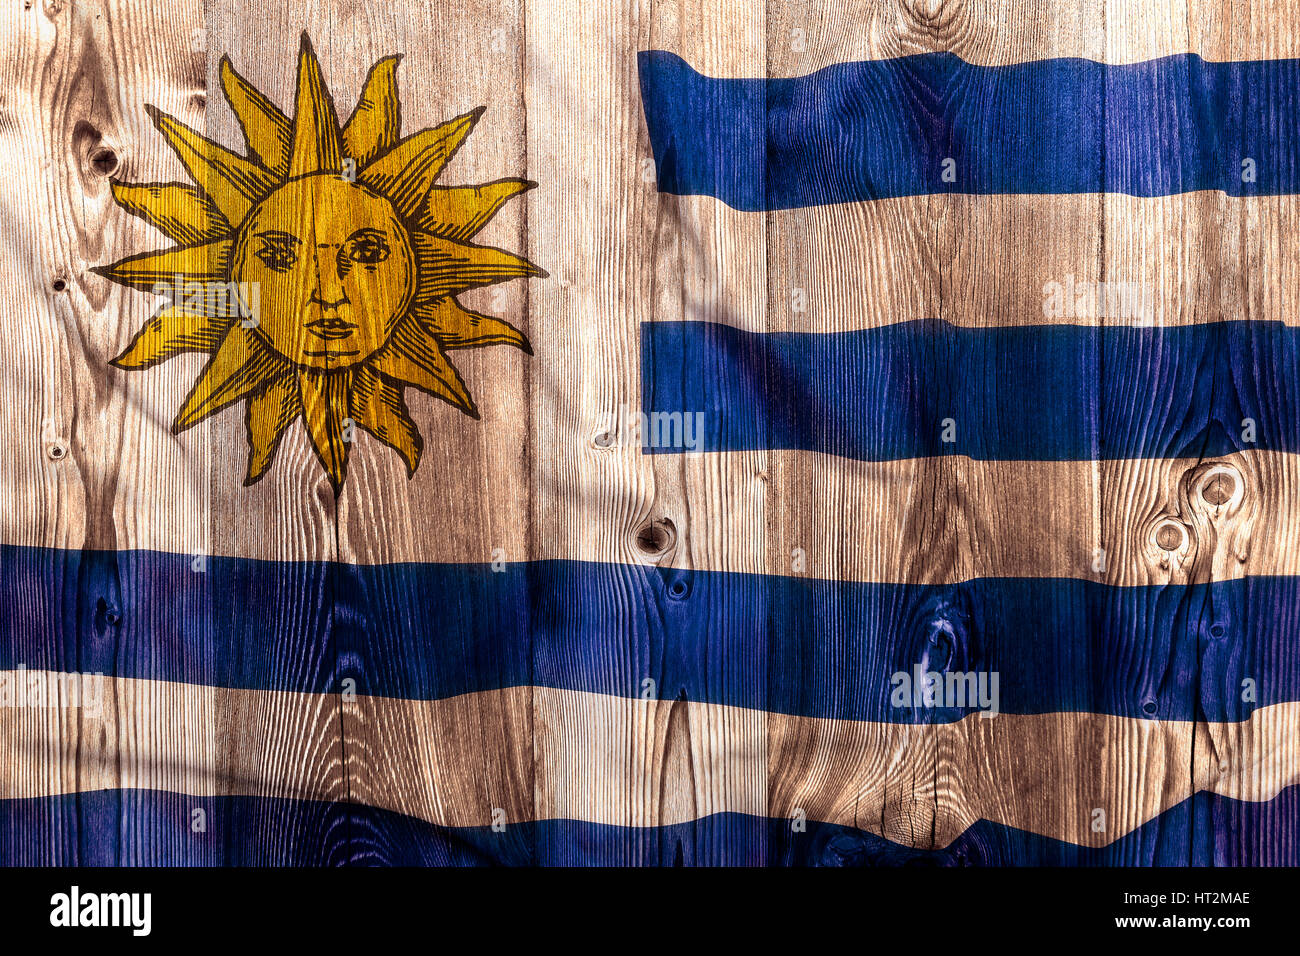 National flag of Uruguay on wooden background Stock Photo